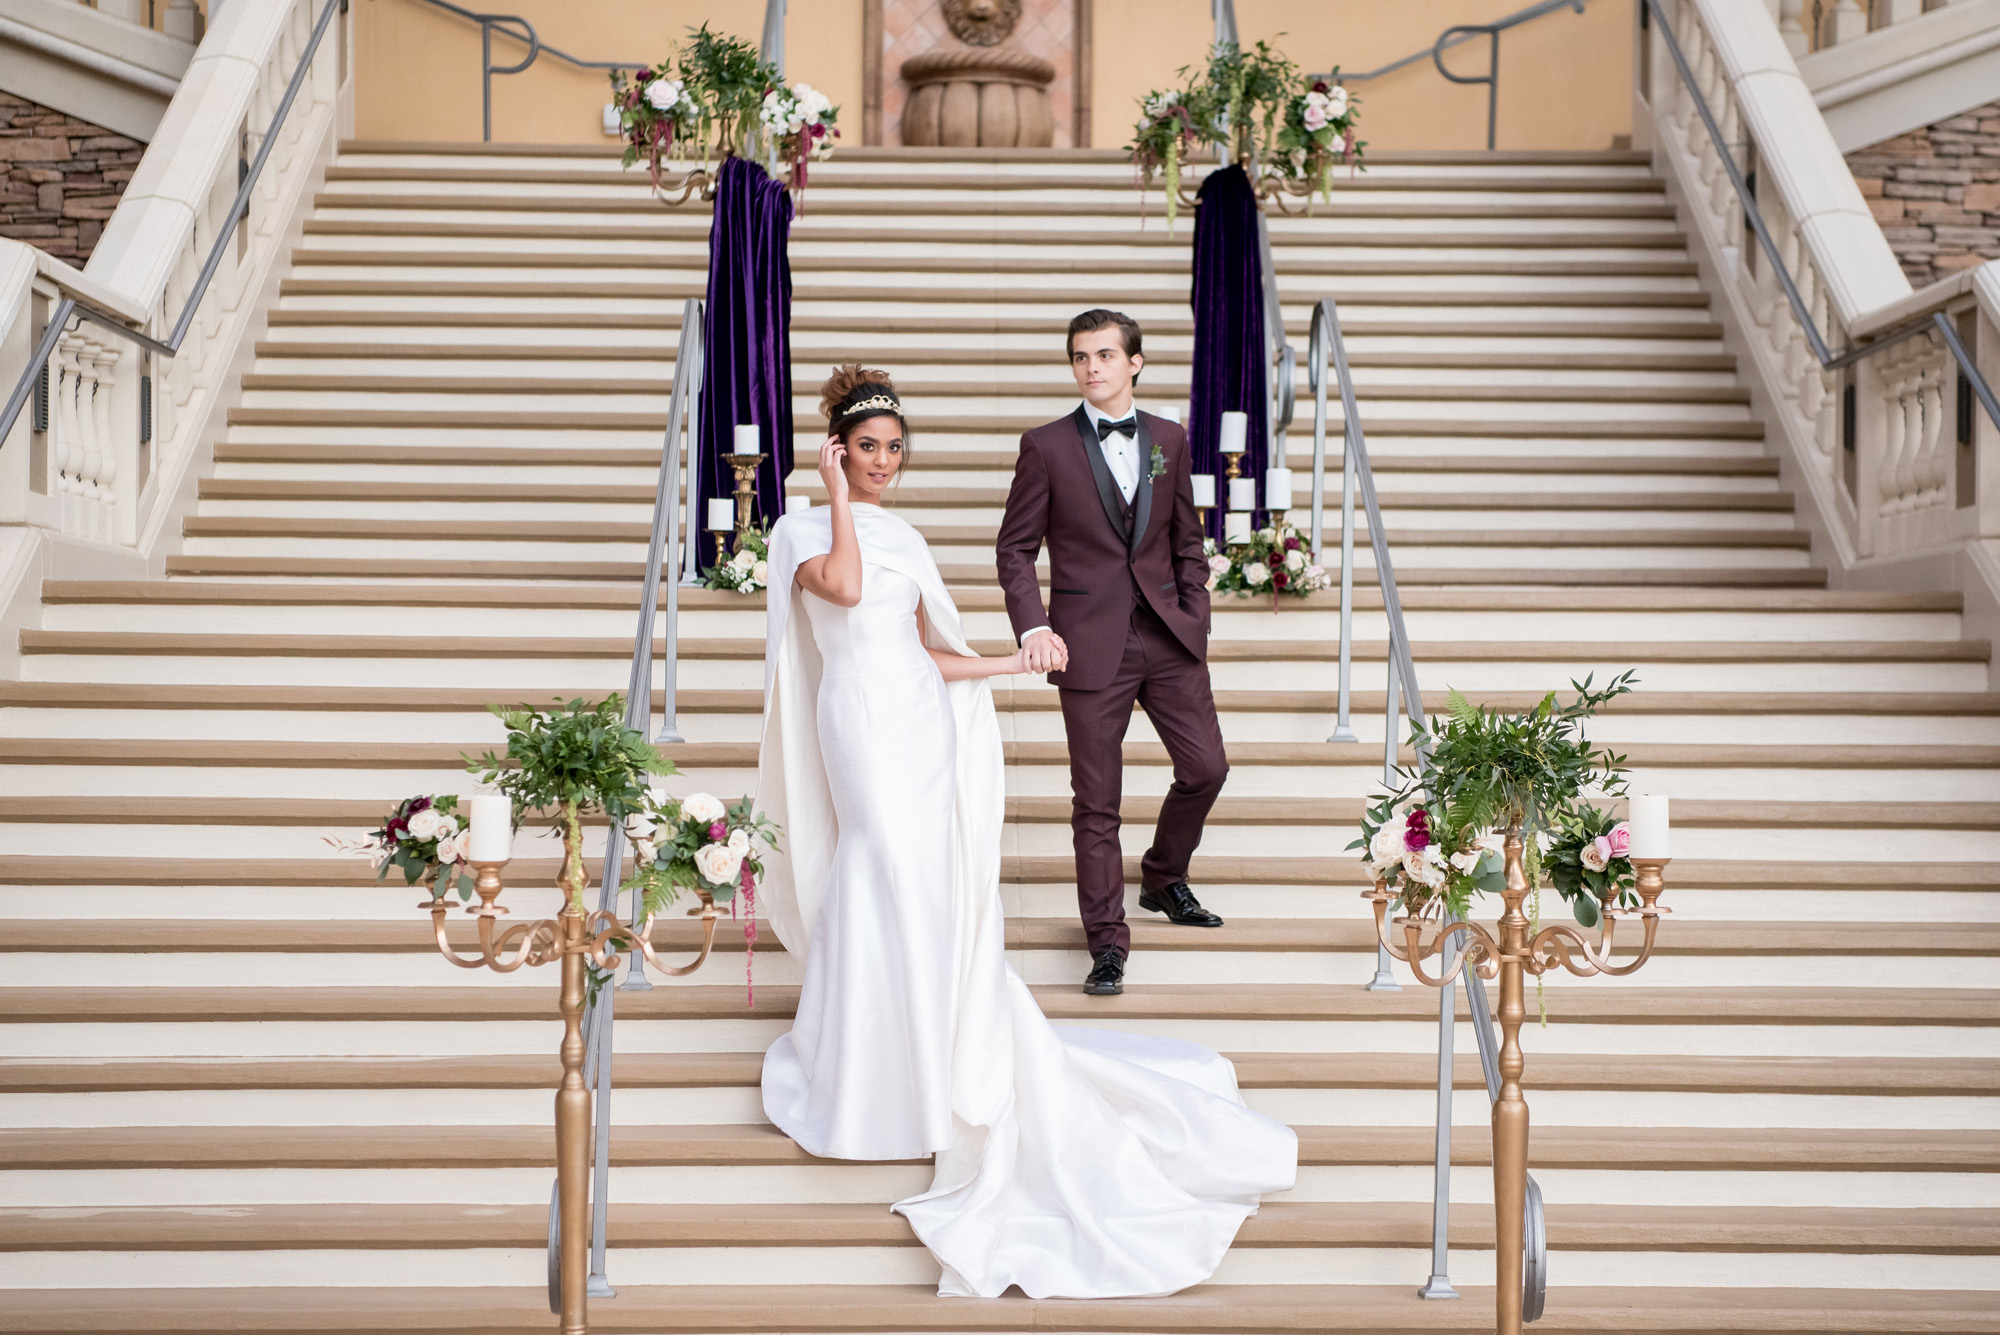 Royal Wedding Inspiration at Green Valley Ranch | Kristen Marie Weddings + Portraits, Las Vegas wedding photographer